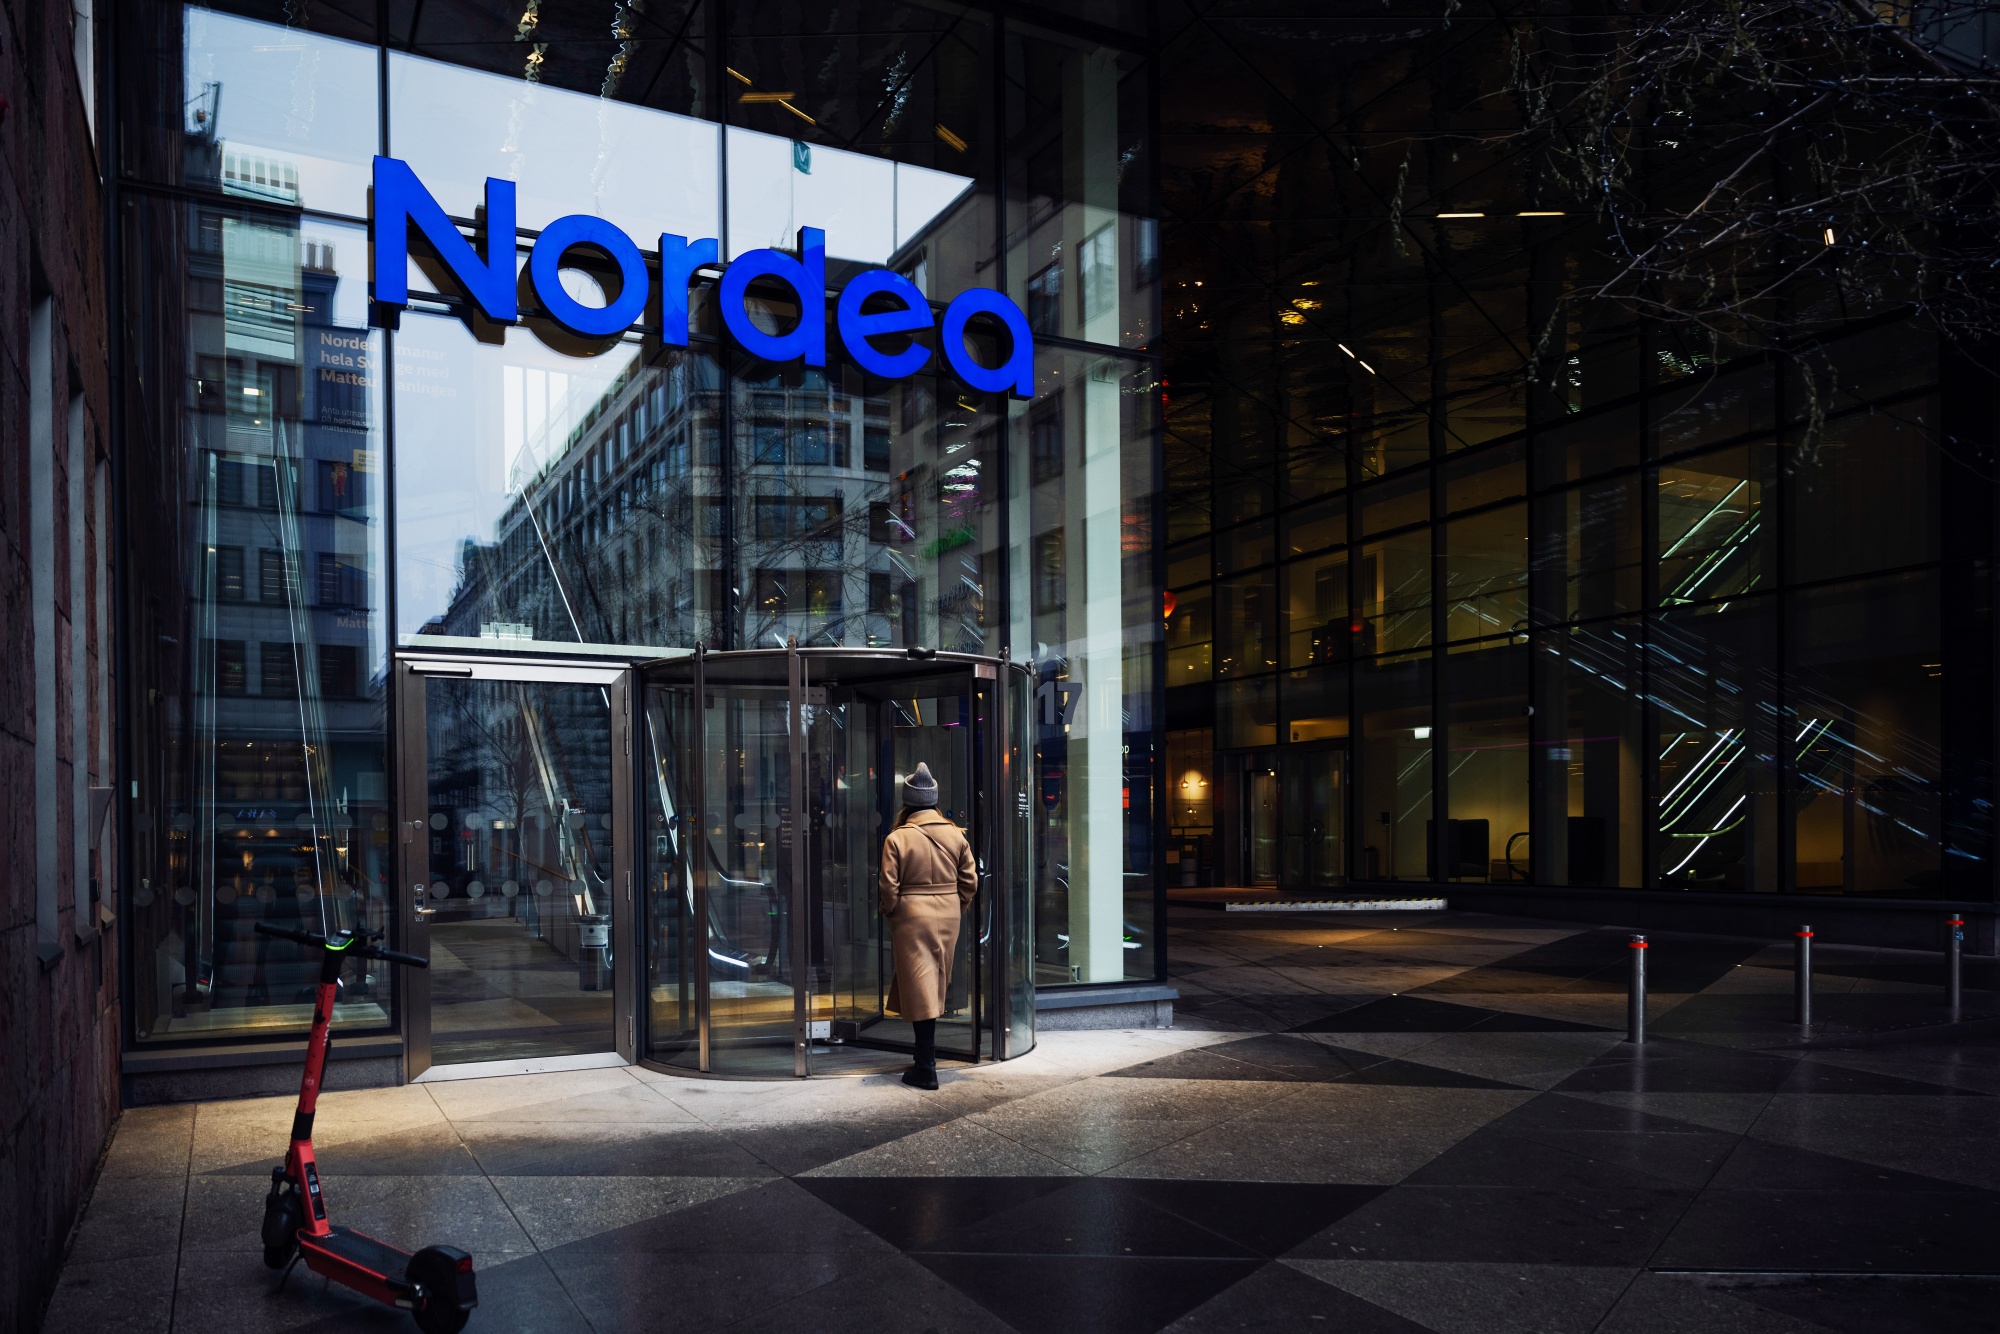 Russian Billionaire Loses Lawsuit Against Nordic Banks - Bloomberg